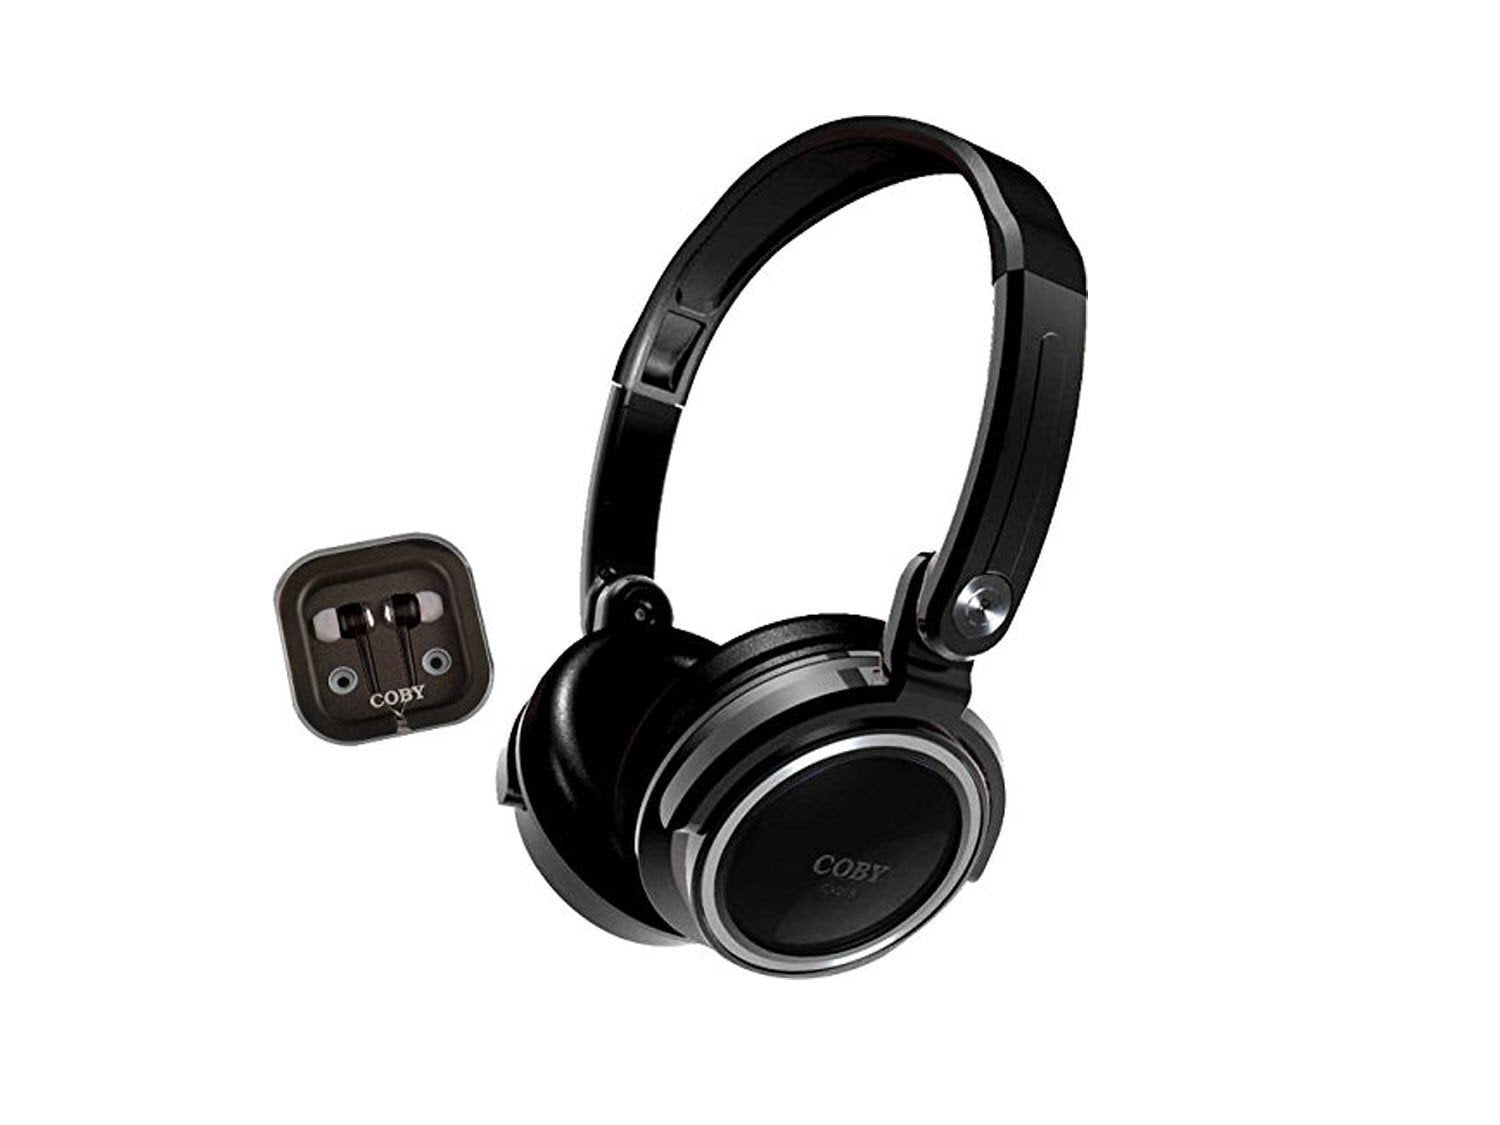 Coby CVH-800-BLK Headphones and Earbuds - Black